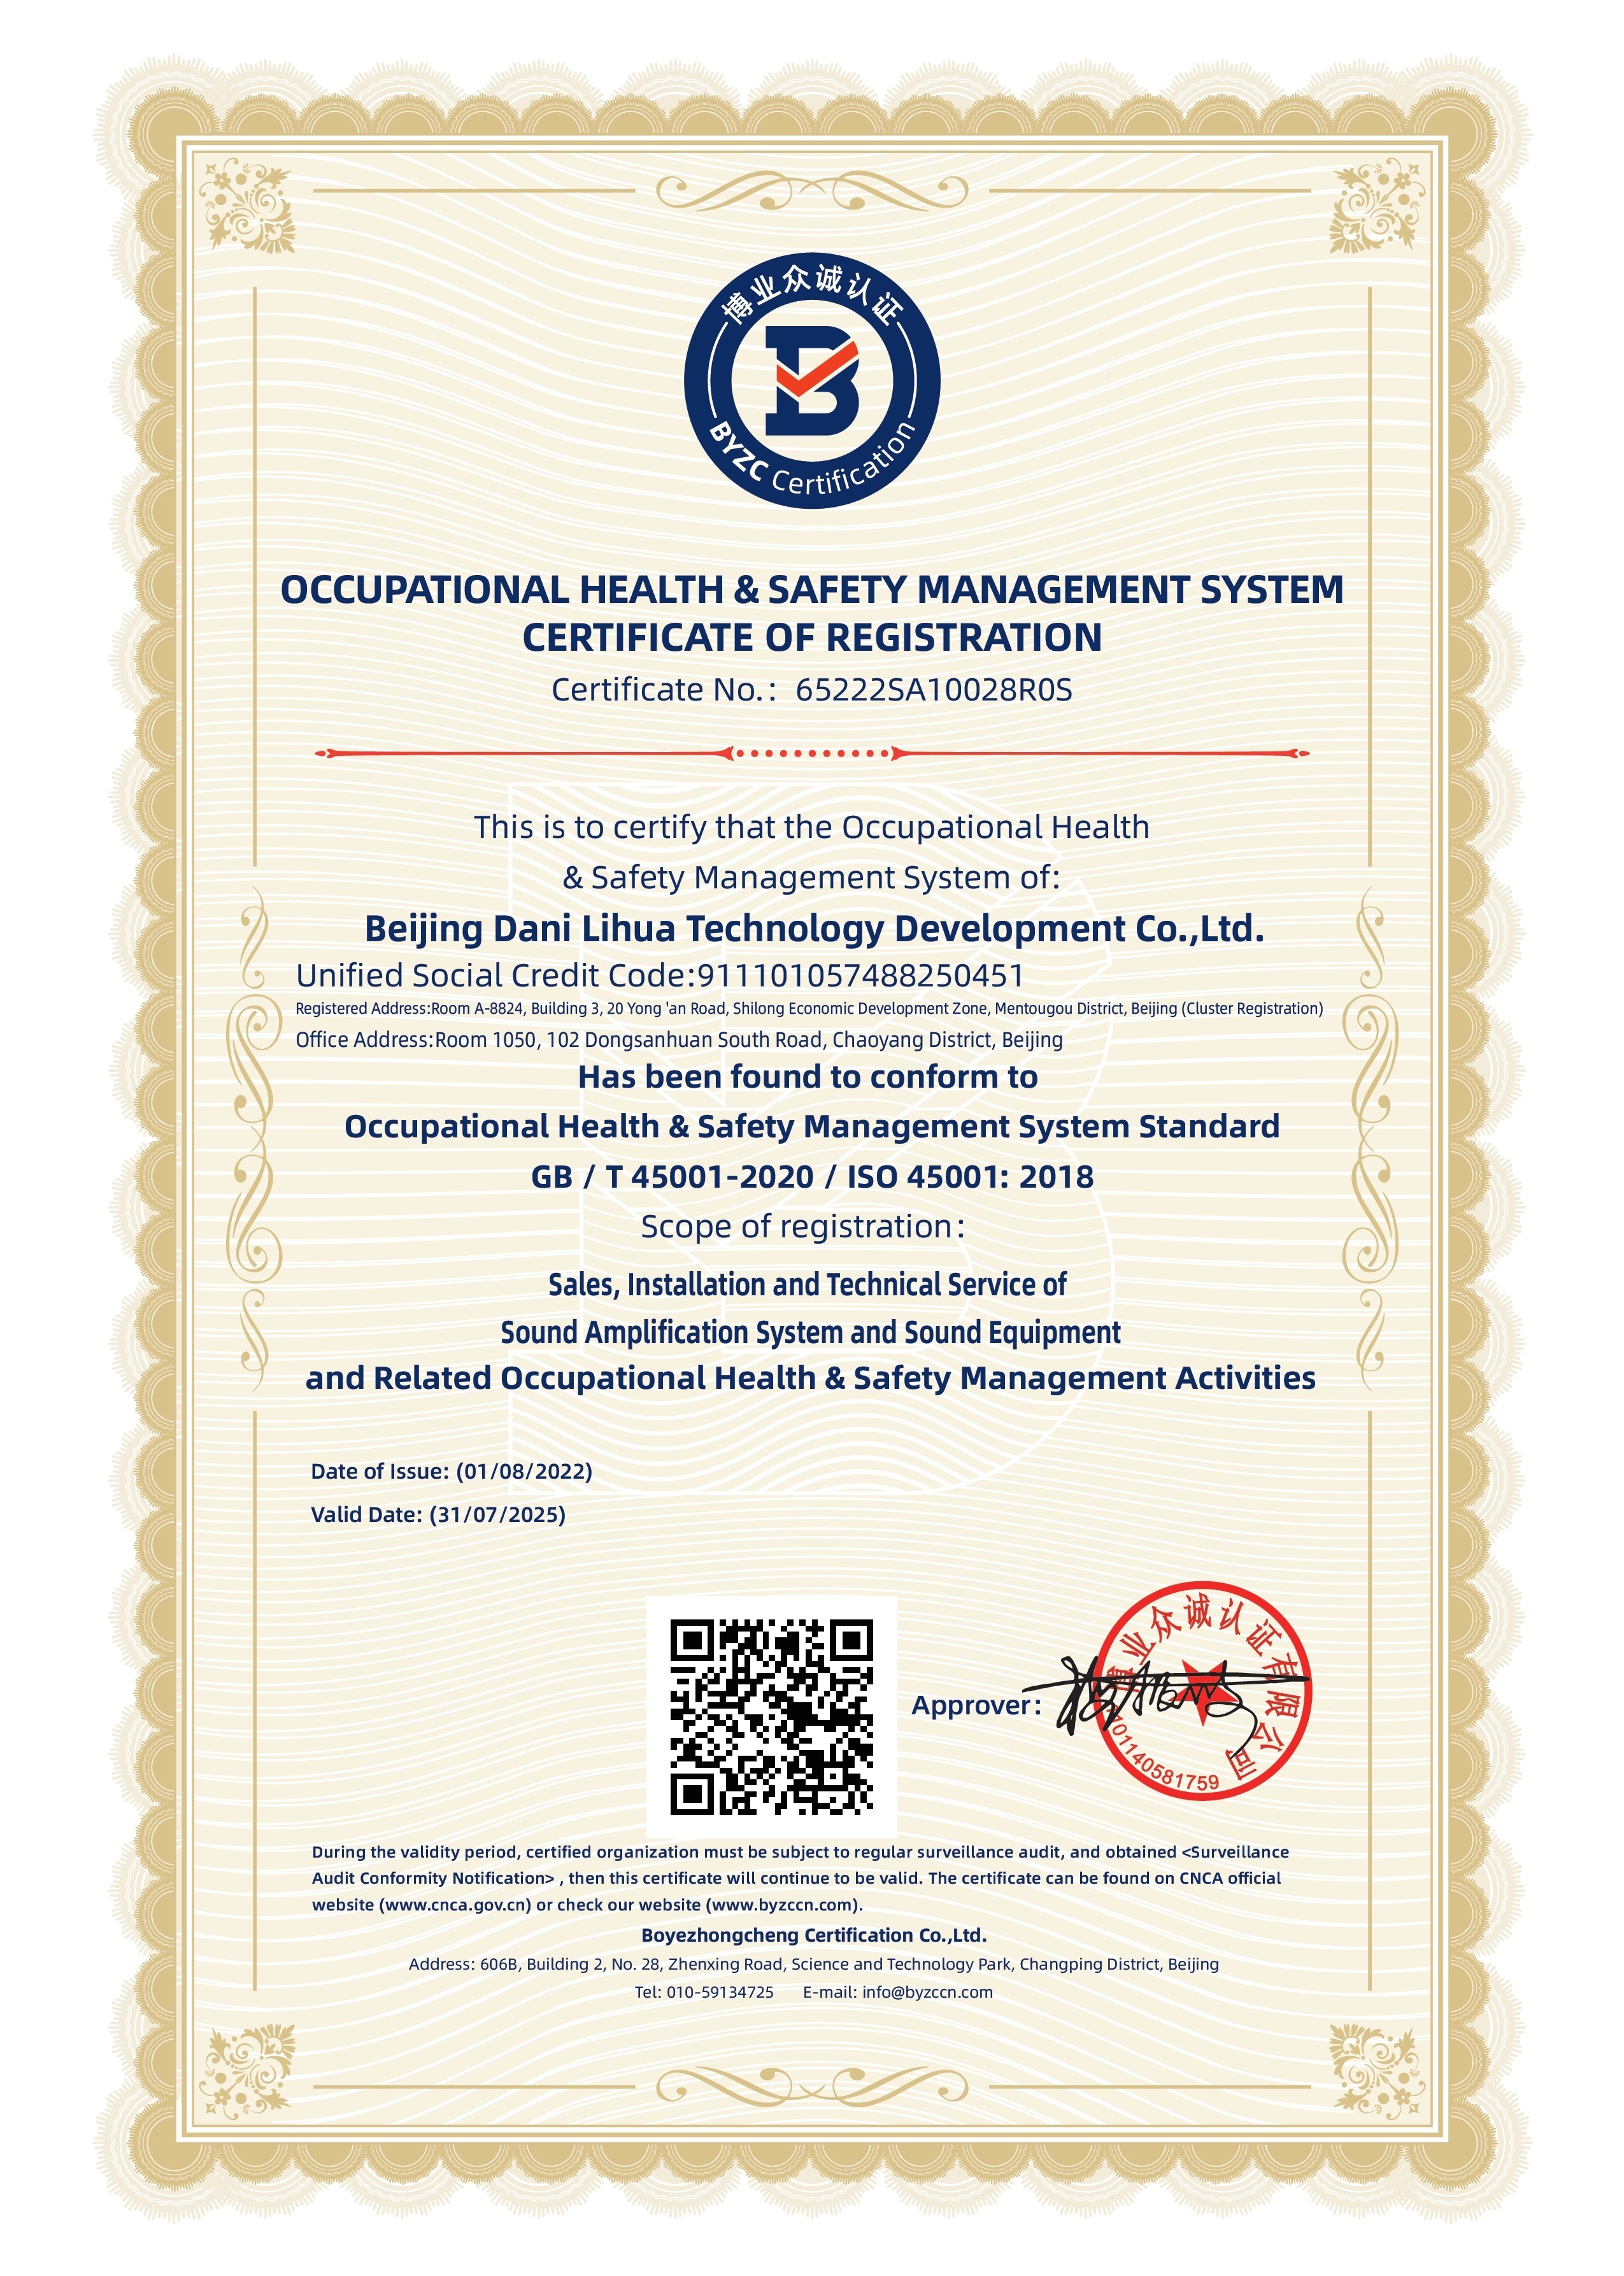 ISO45001 职业健康安全管理体系认证